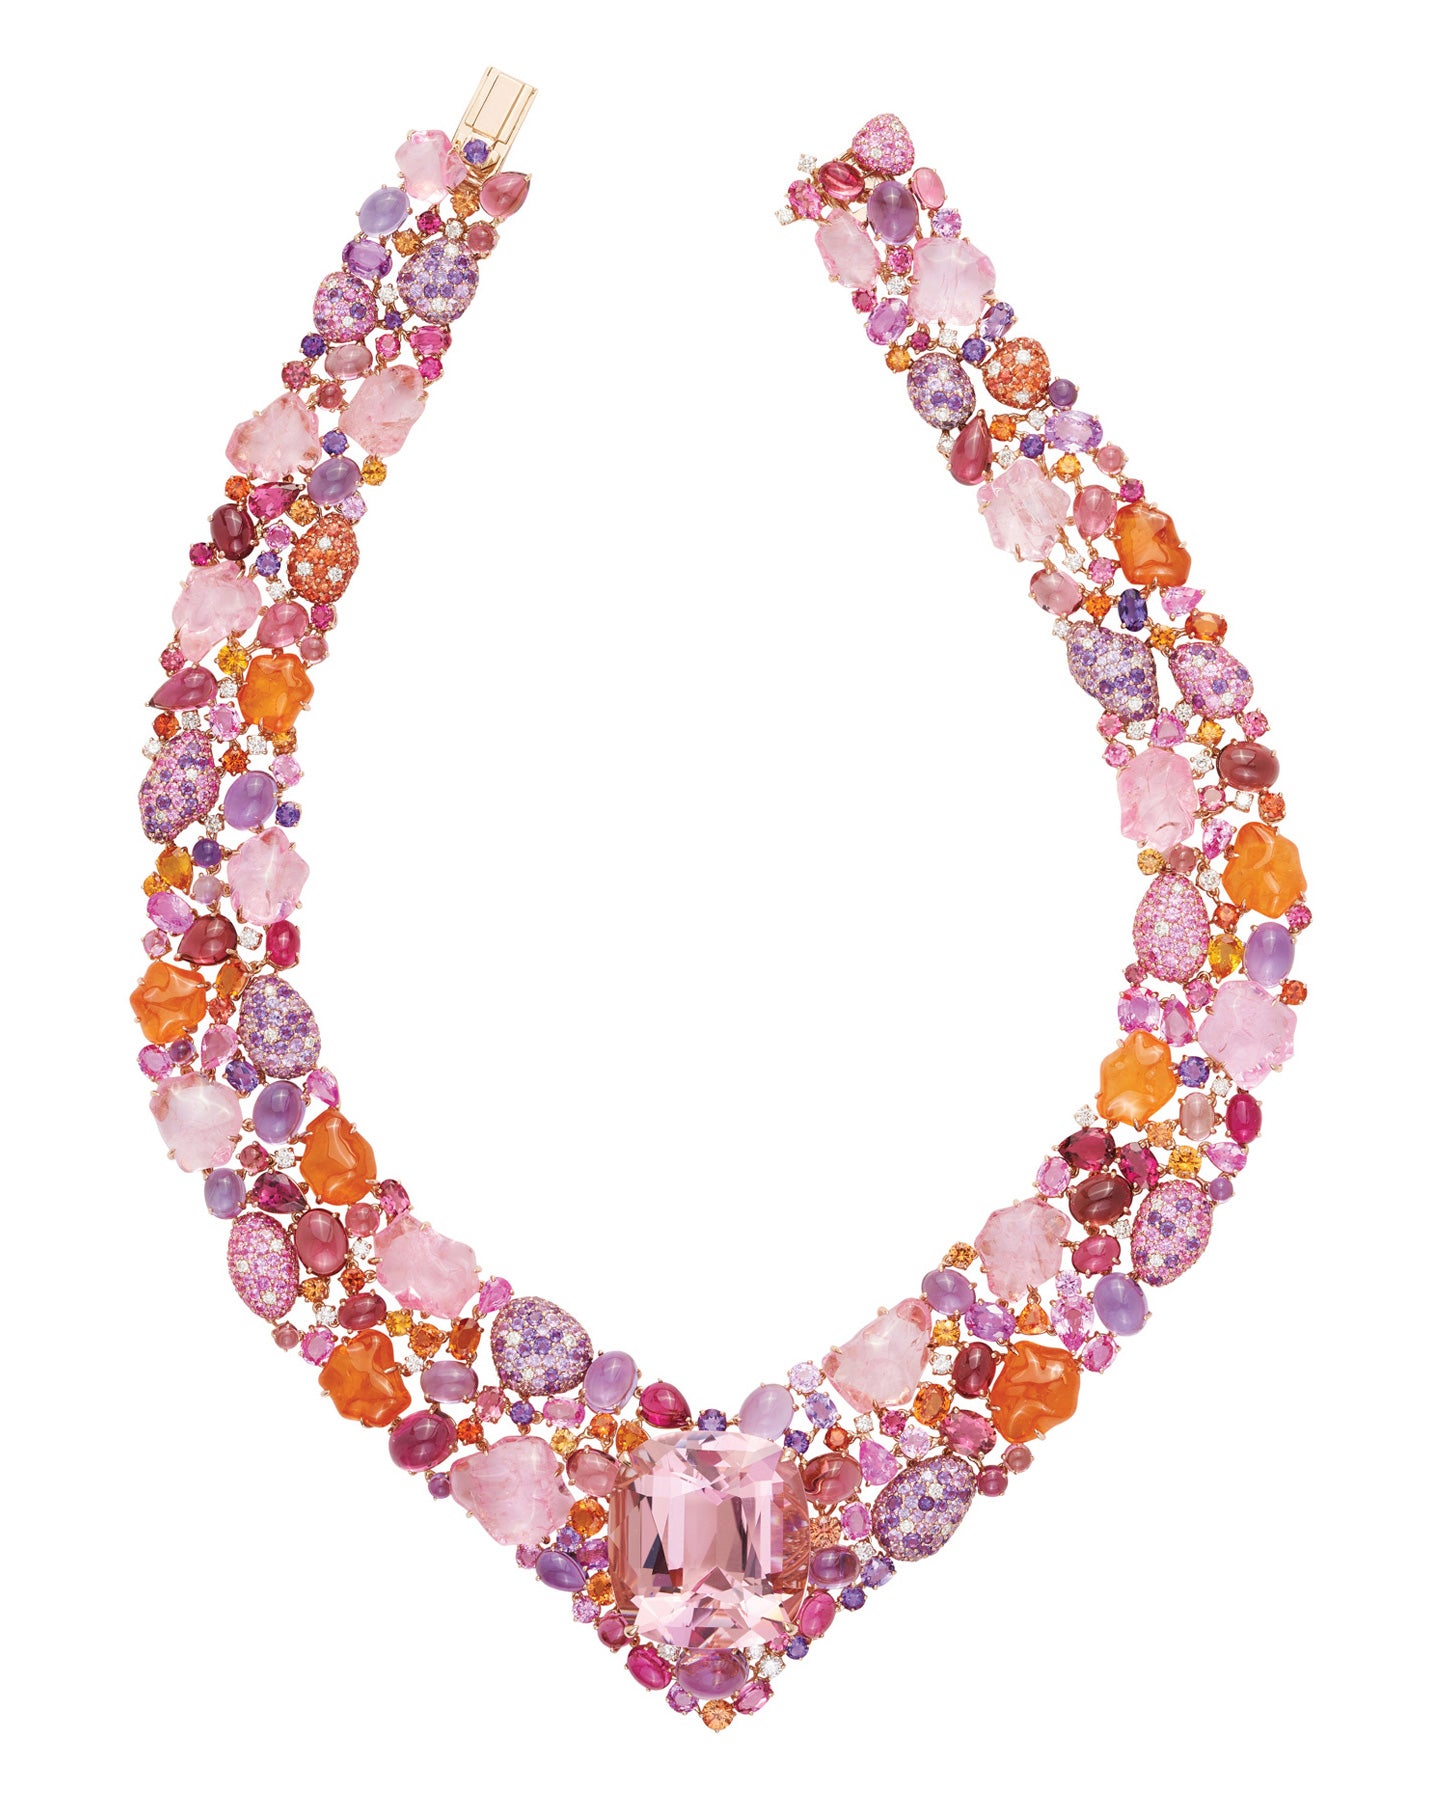 Morganite and Mandarin Garnet Collier featuring Diamonds, Pink, Orange and Purple Sapphires, Amethyst and Pink Tourmalines